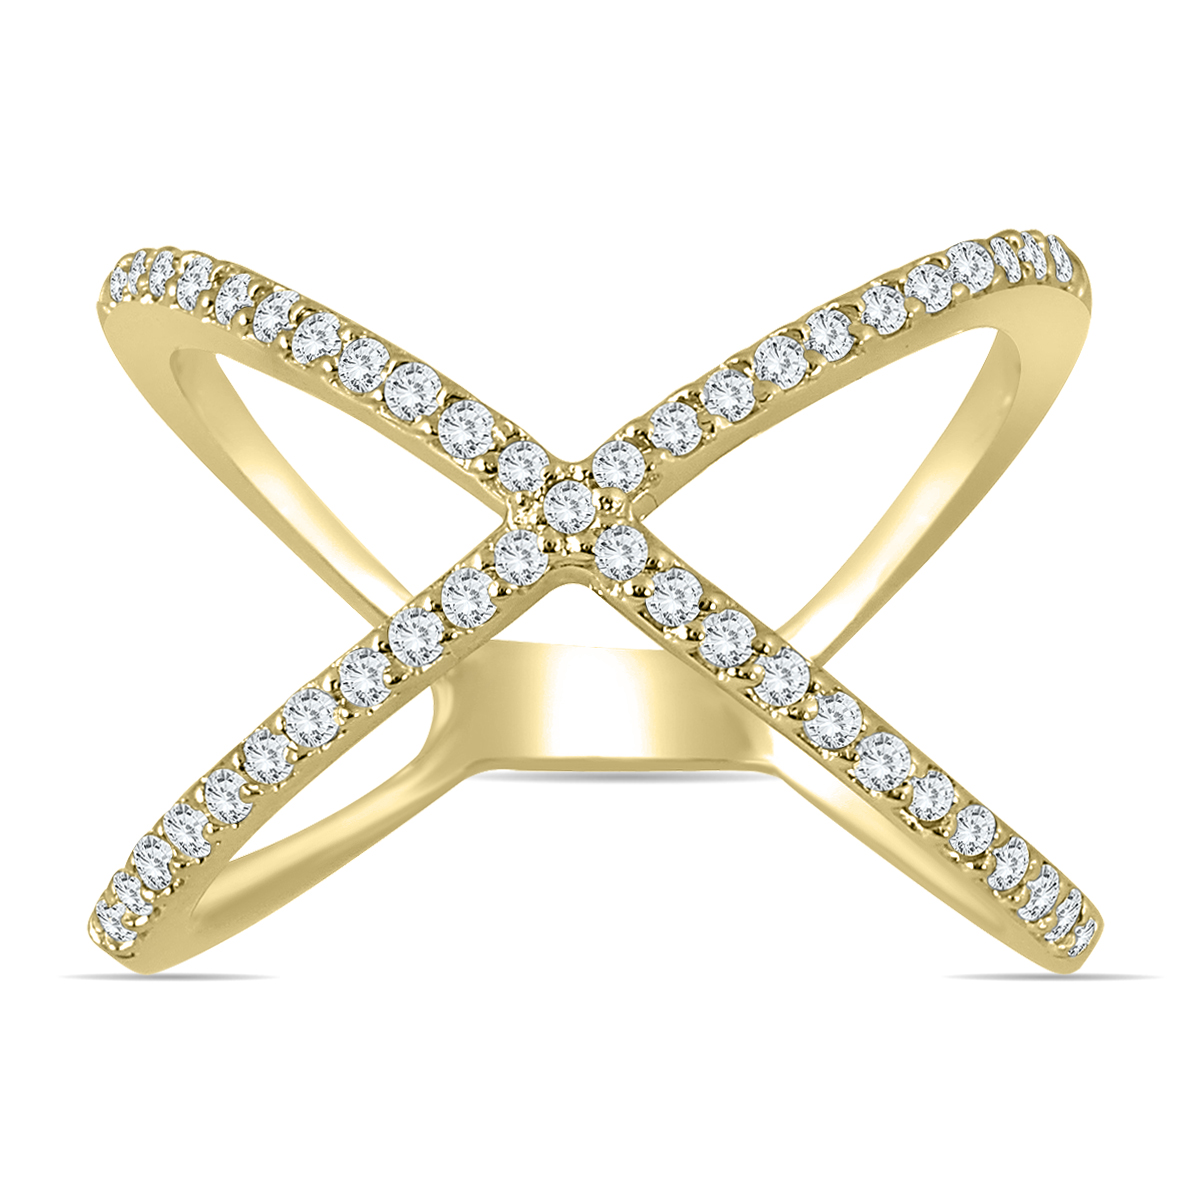 1/2 Carat TW Diamond Criss Cross X Ring in 10K Yellow Gold (K-L Color, I2-I3 Clarity)